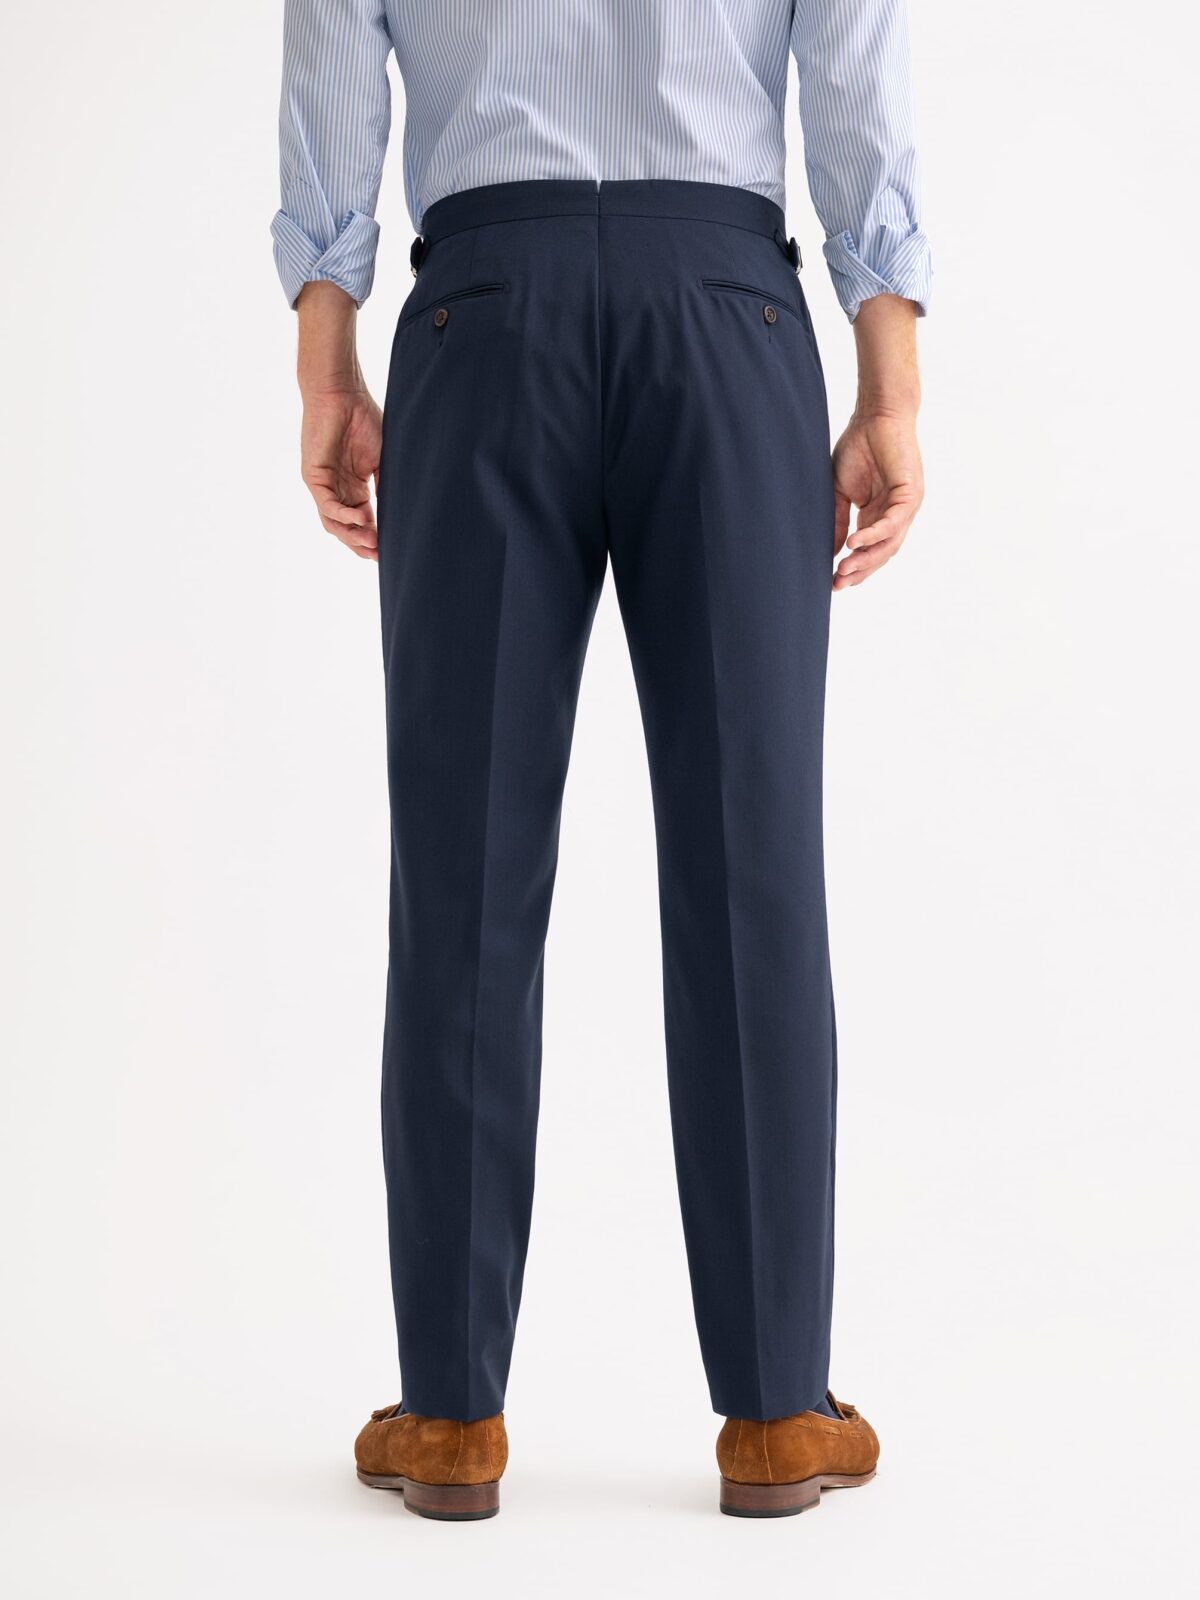 CHOKMAR Gurkha Slim Fit Pants Wrinkle Resistant Fabric No Belt Needed (US,  Waist Inseam, 29, 29, Matte Black) at Amazon Men's Clothing store